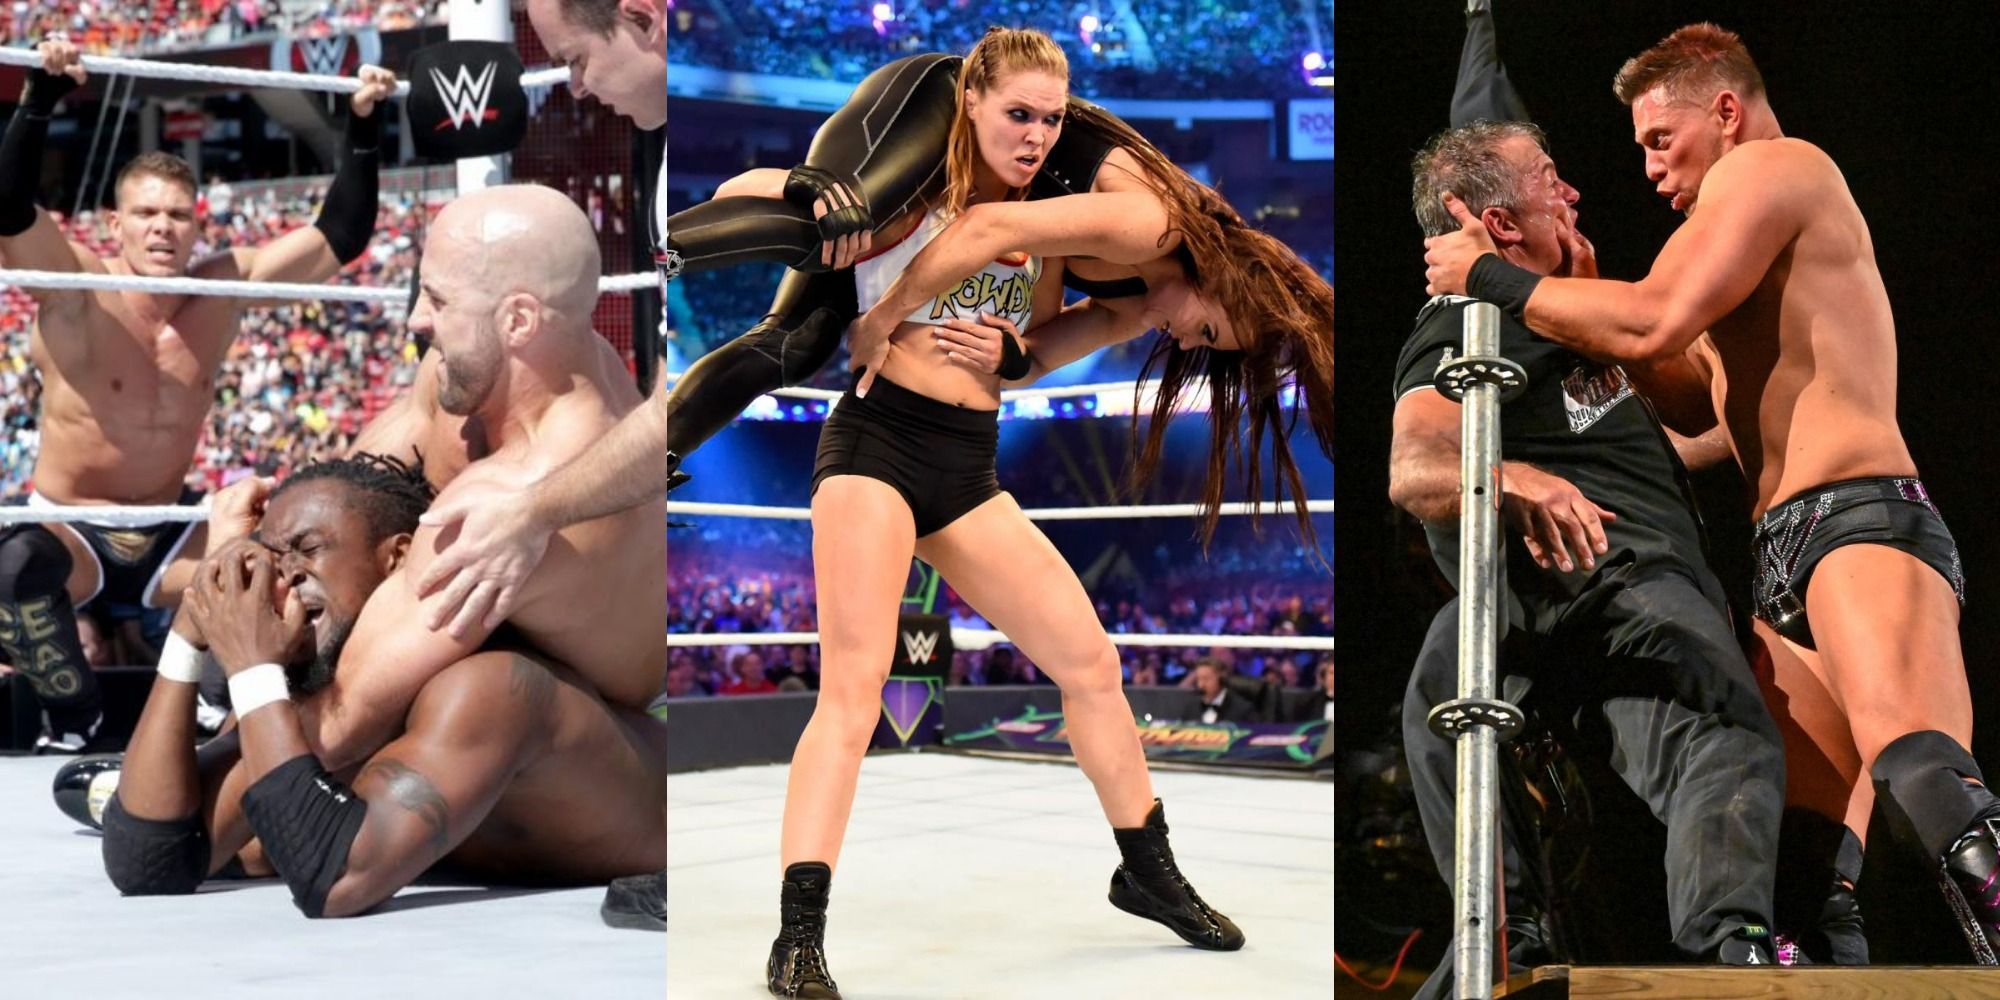 Cesaro puts Kofi Kingston in a submission as Tyson Kidd watches/Ronda Rosuey lifts Stephanie McMahon/Miz threatens Shane McMahon